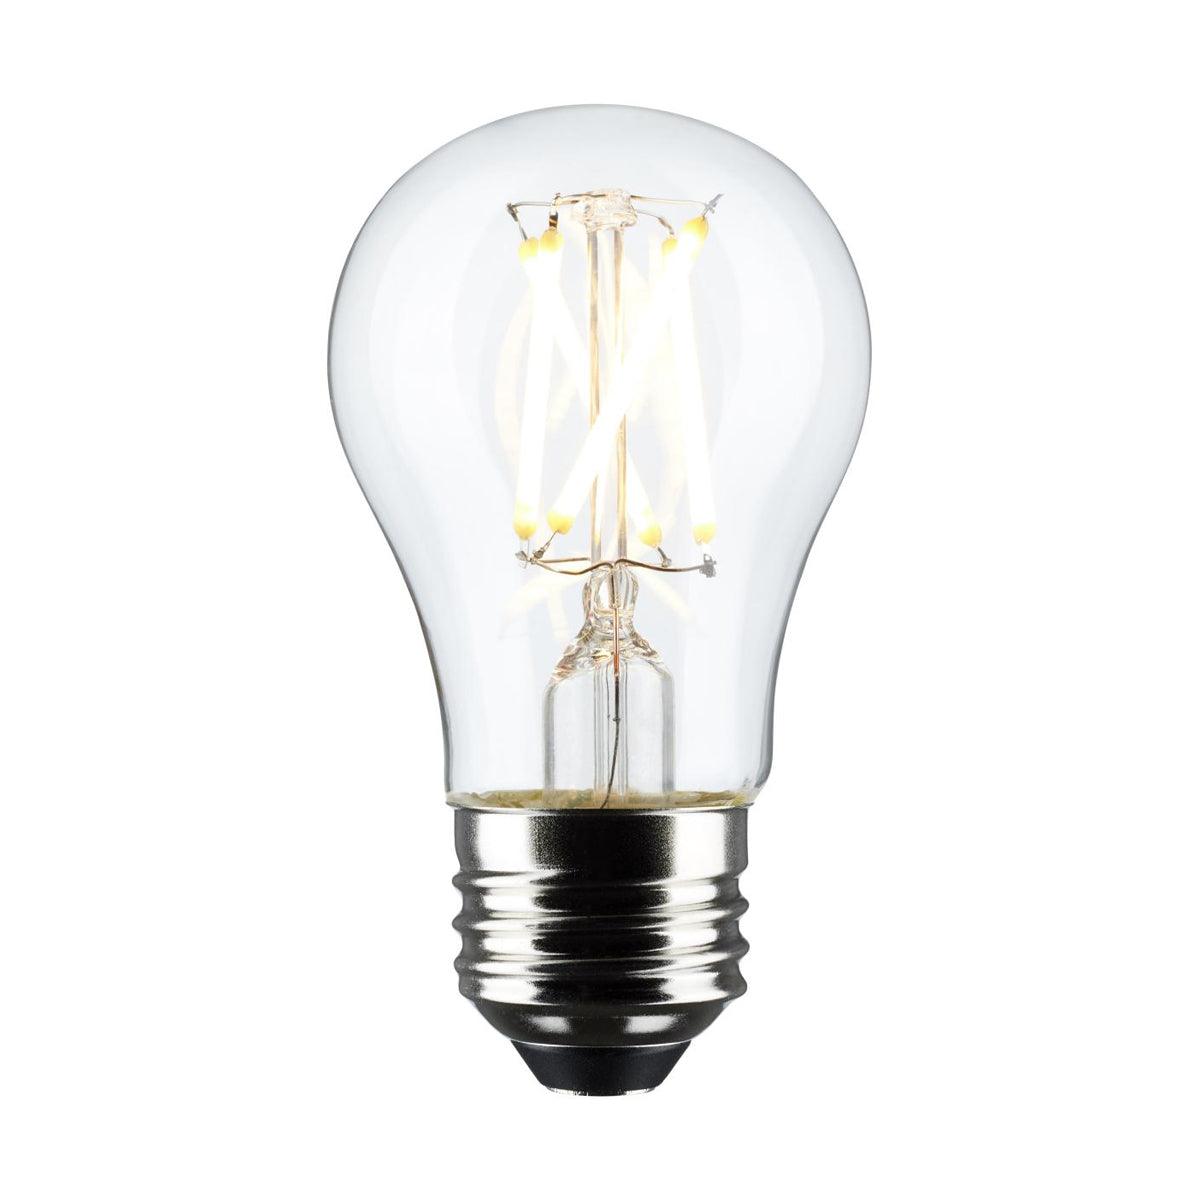 A15 Standard Filament LED Bulb, 6 Watt, 450 Lumens, 2700K, E26 Medium Base, Clear Finish, Pack Of 2